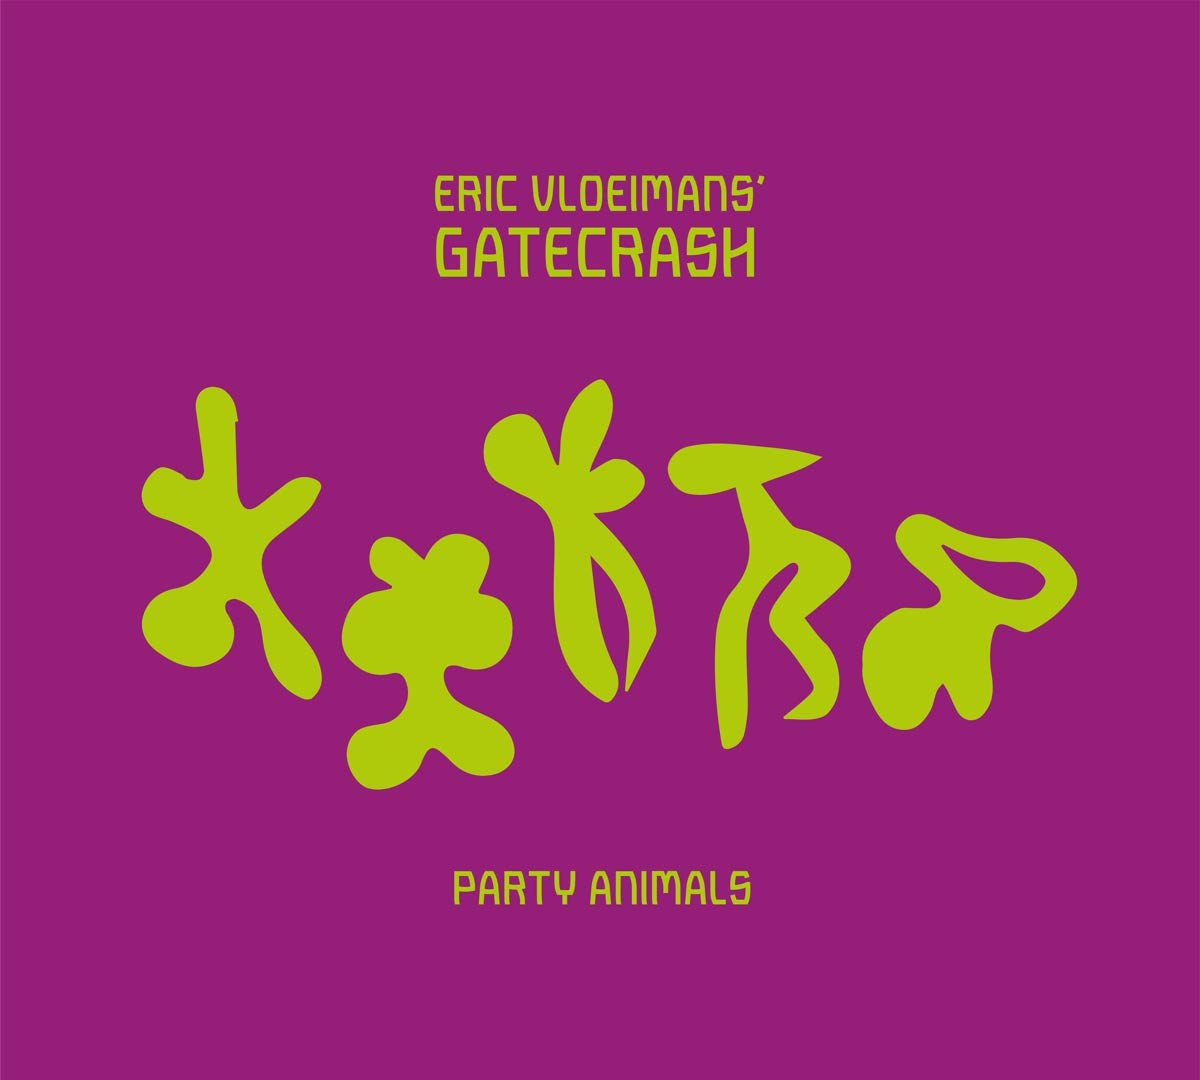 ERIC VLOEIMANS - Eric Vloeimans' Gatecrash : Party Animals cover 